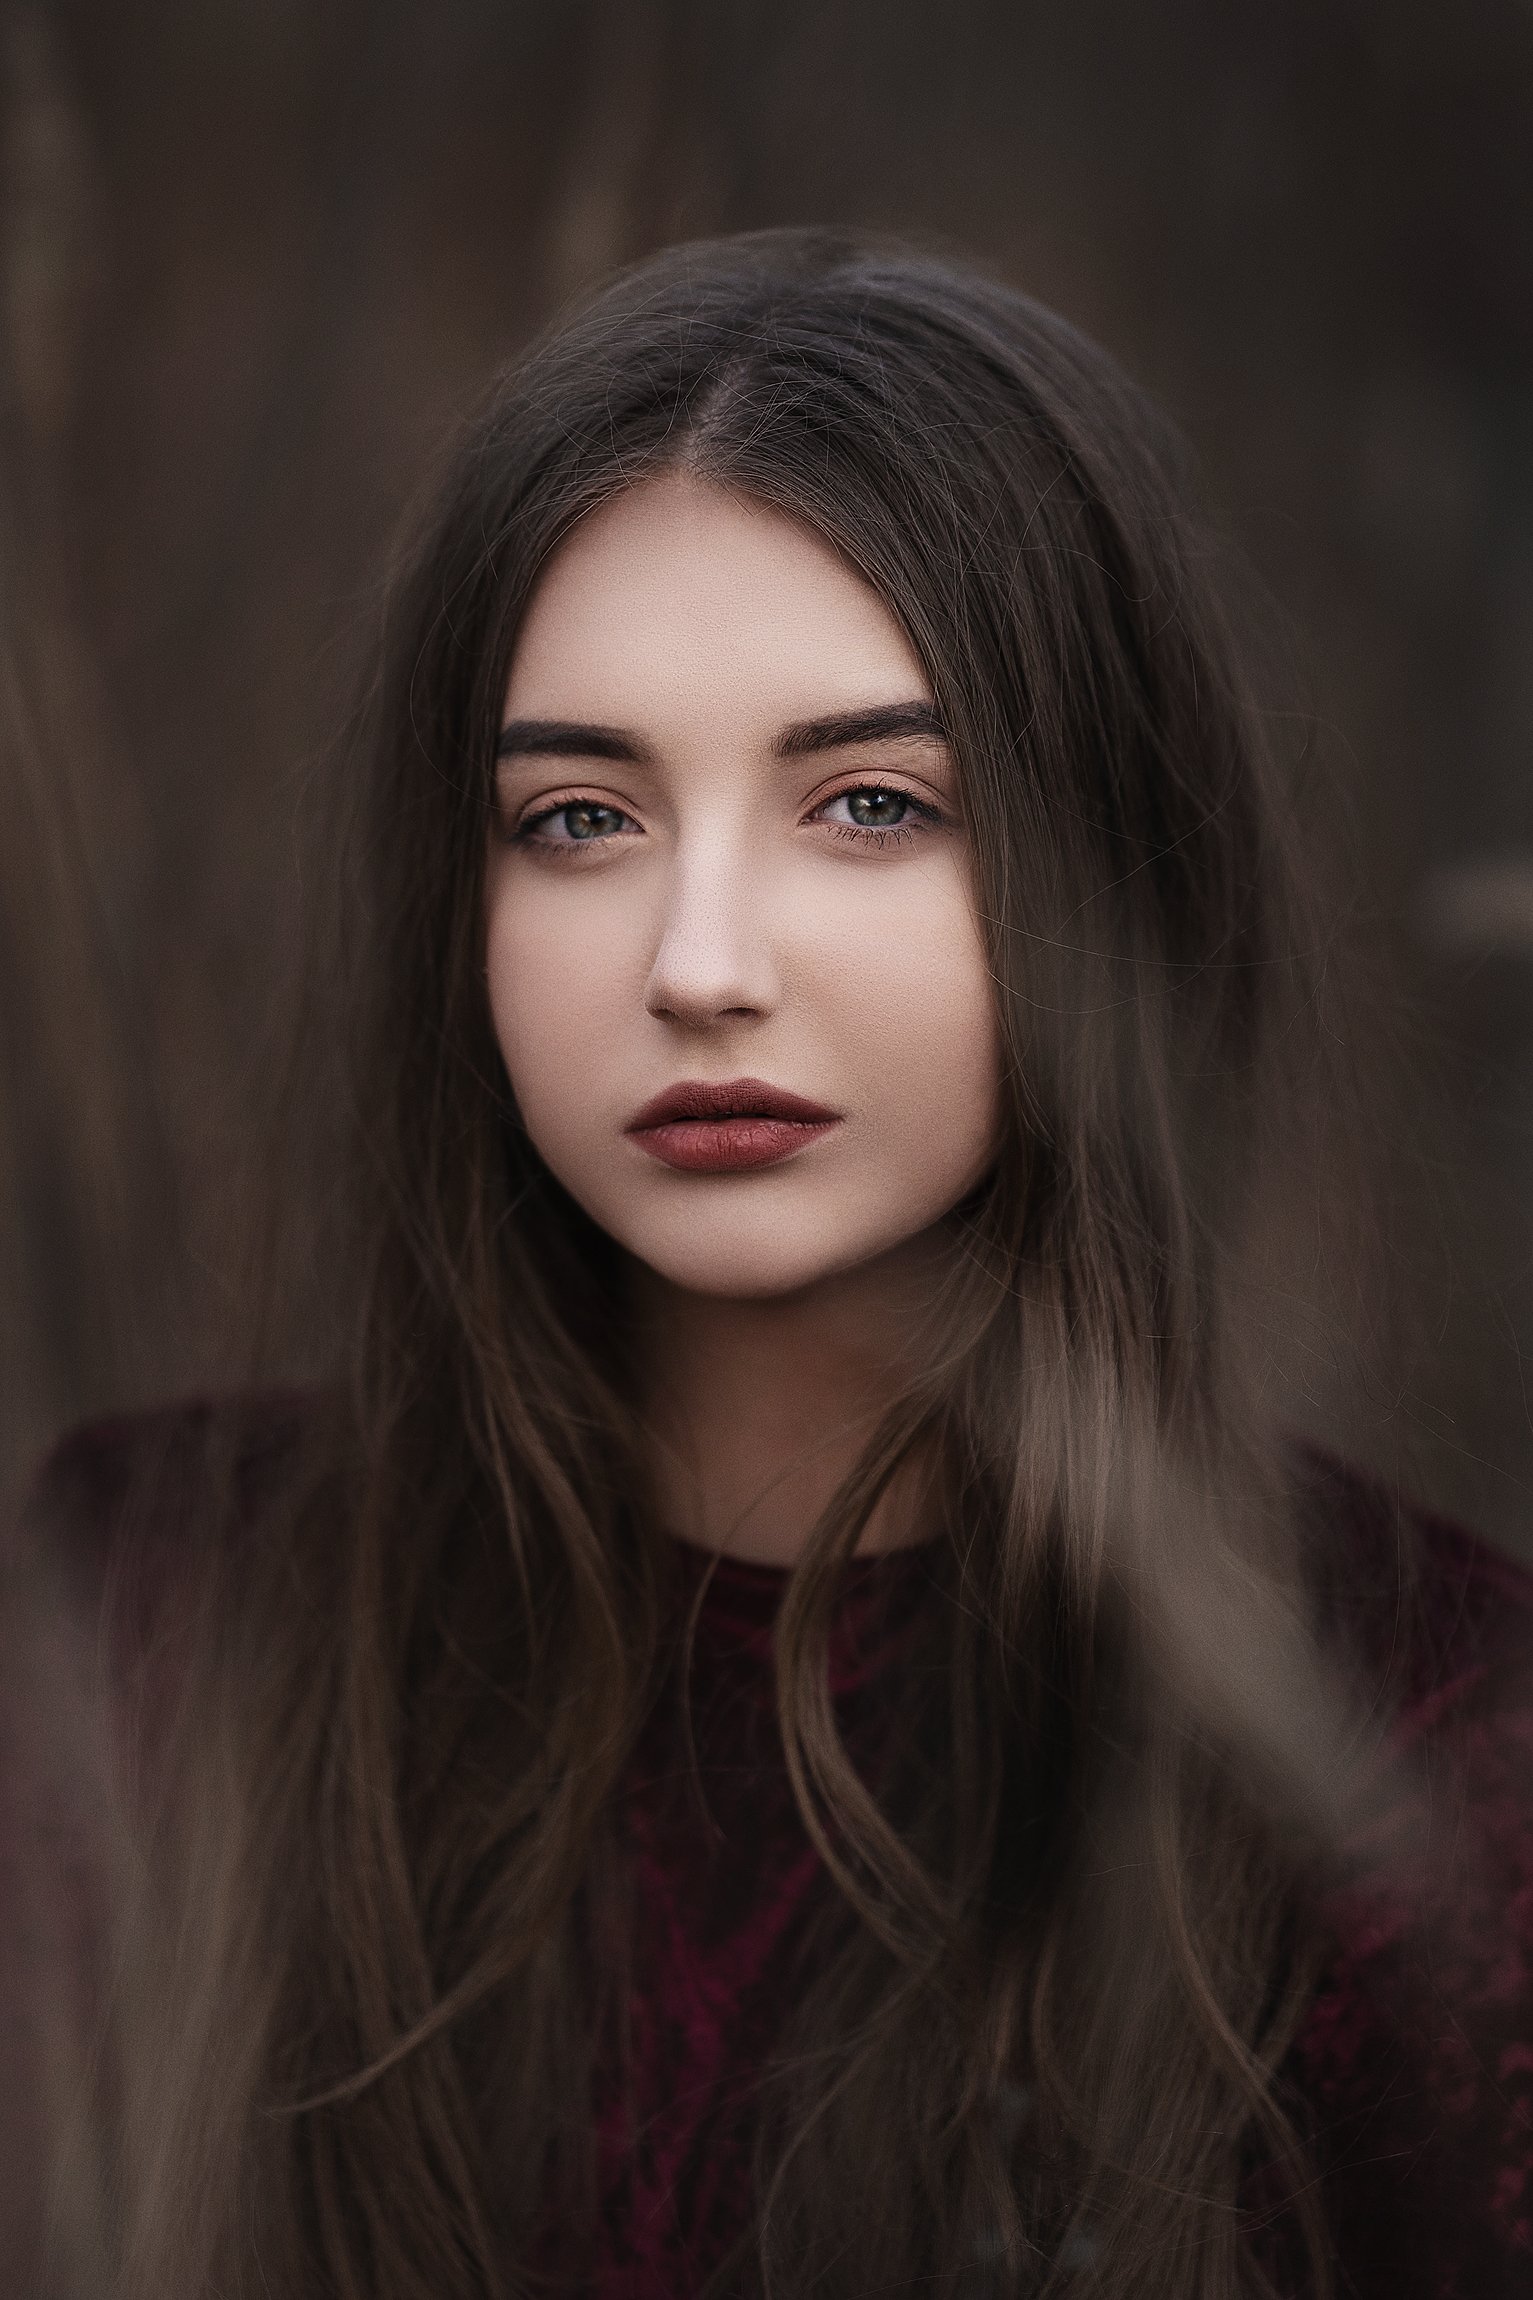 портрет девушка весна свет, Yana Photographyzp